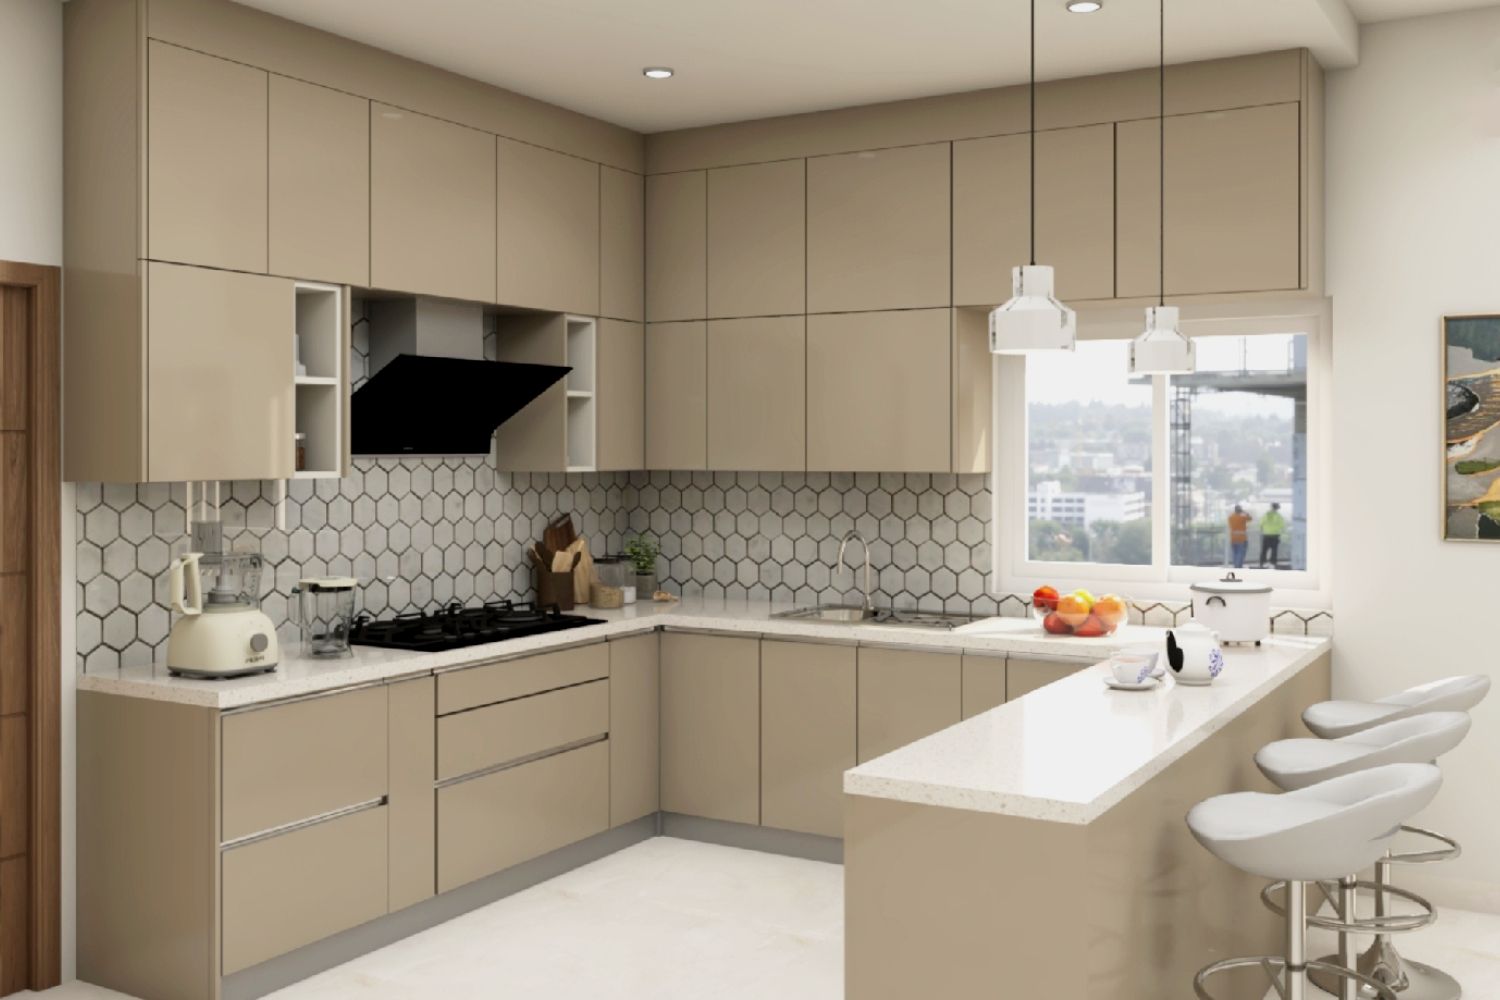 Modern Modular Open Kitchen Cabinet Design With Irish Cream Cabinets And Hexagonal Dado Tiles